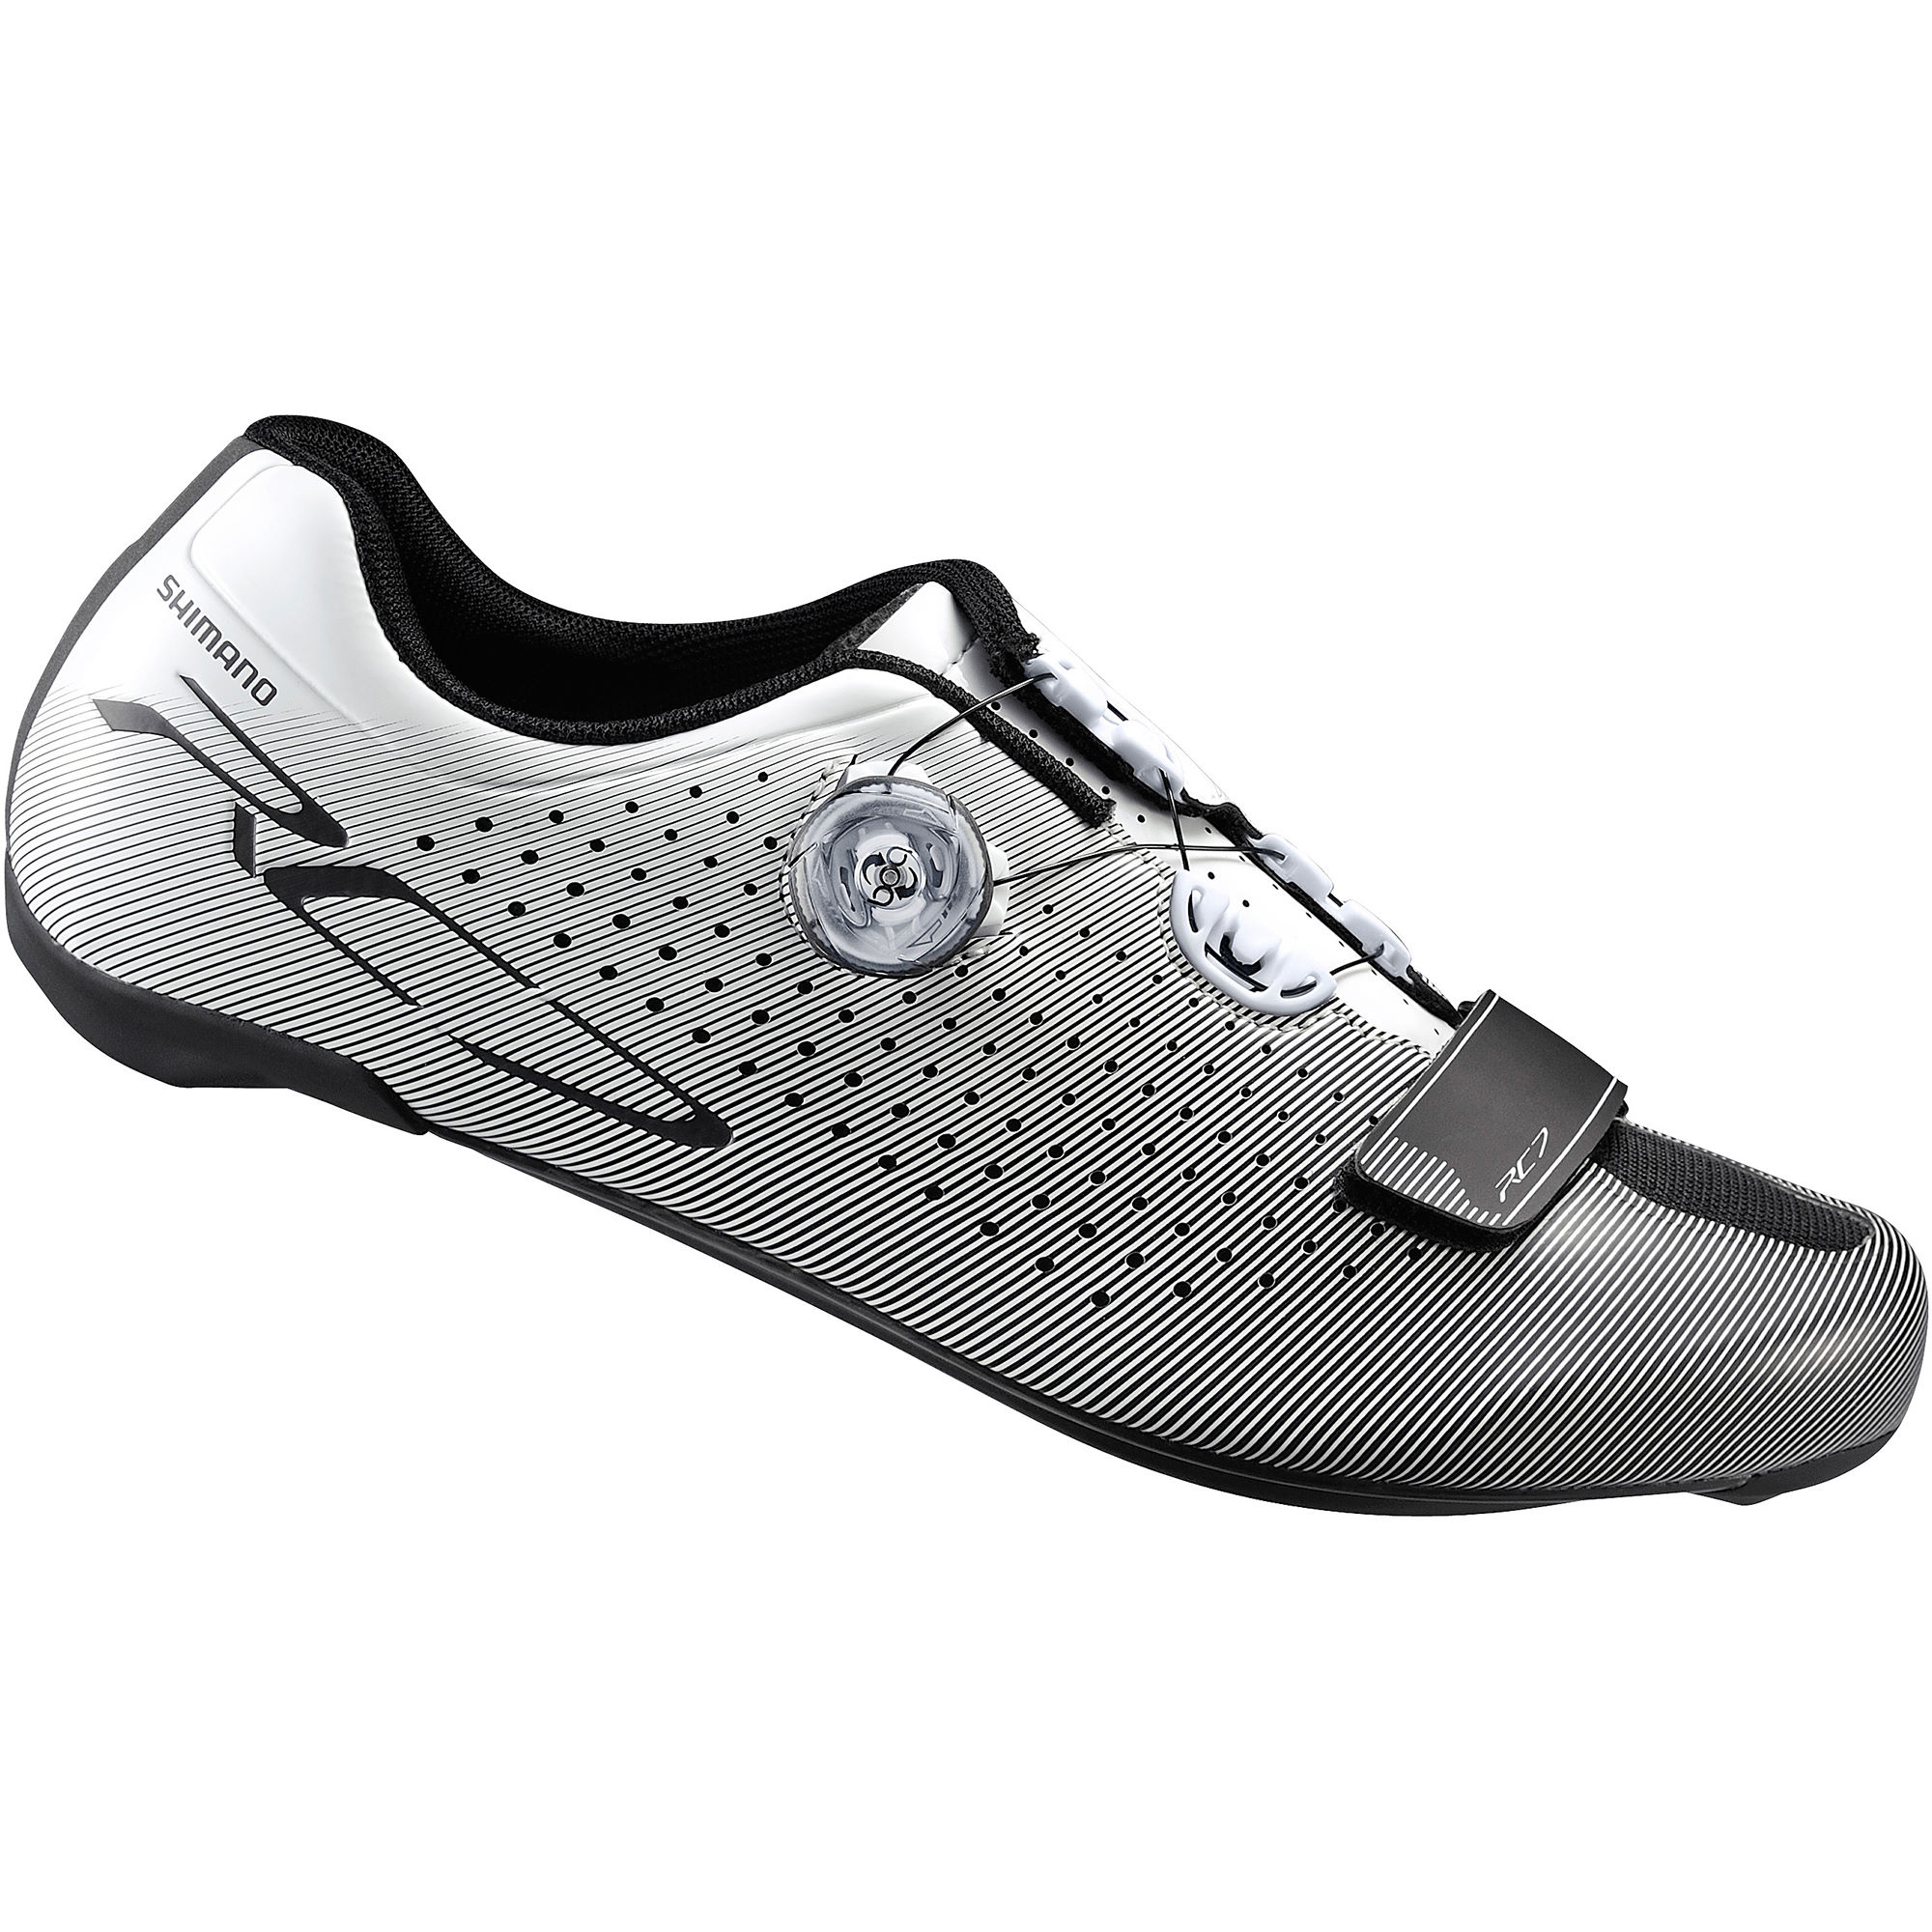 Shimano RC7 SPD-SL Road Shoes | Merlin Cycles